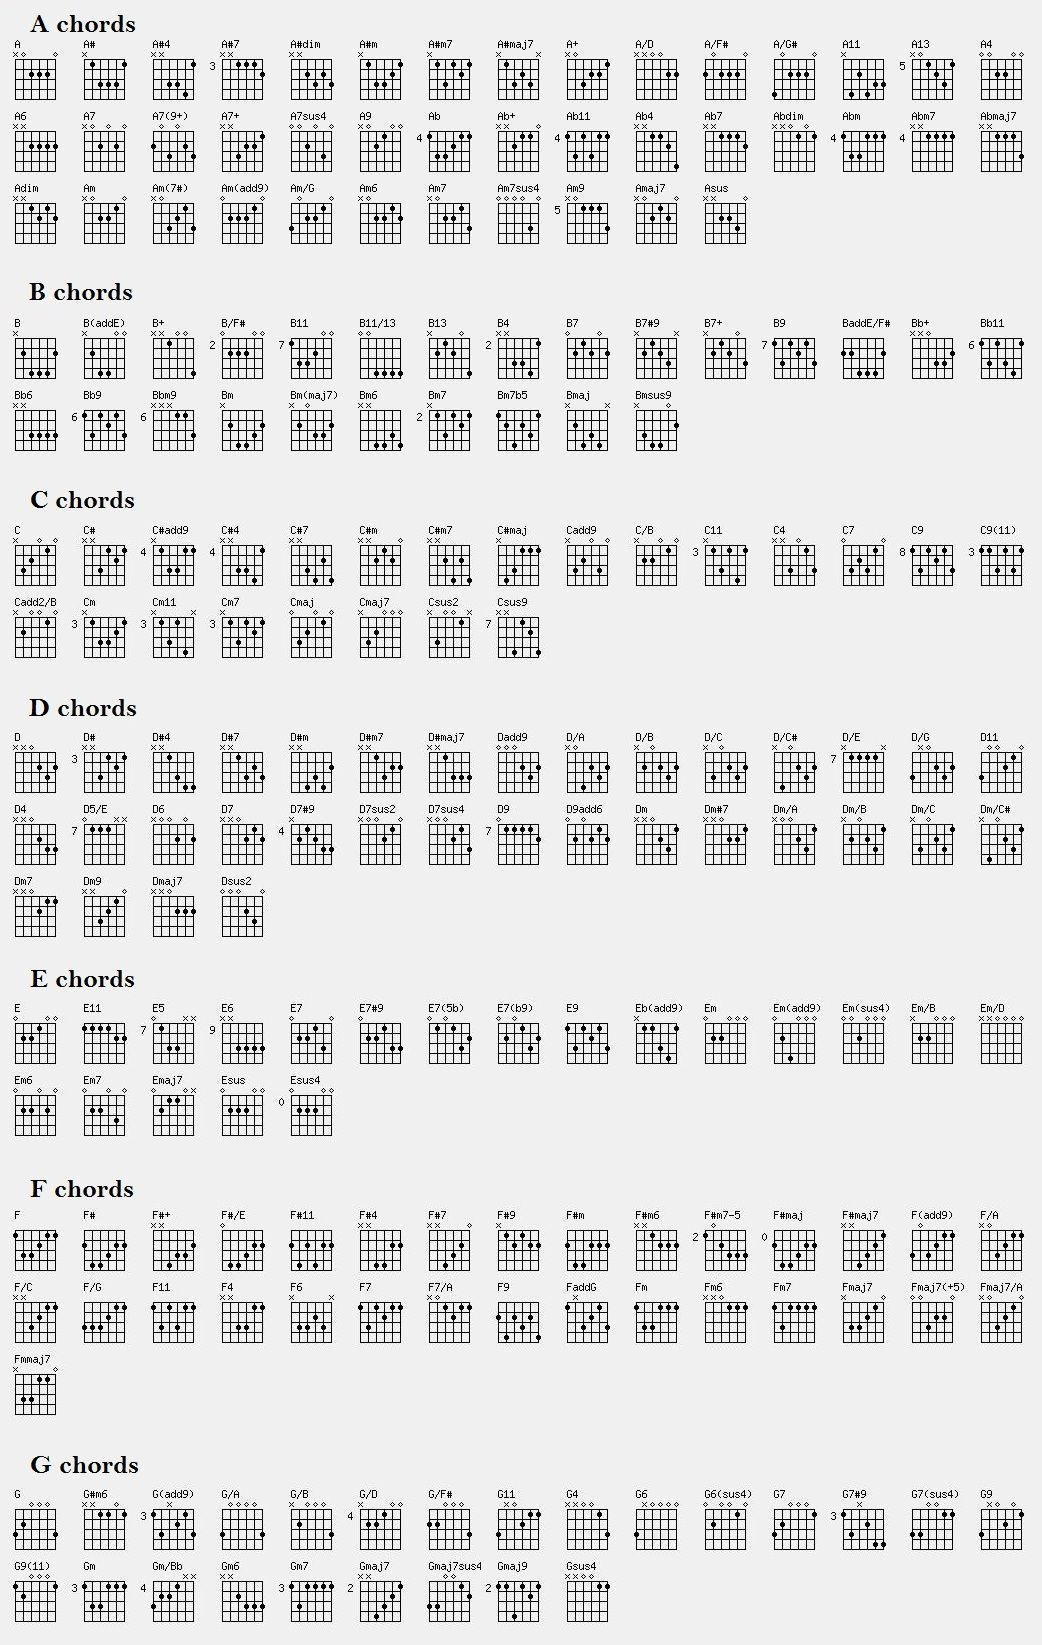 Free Printable Guitar Tabs For Beginners Free Printable